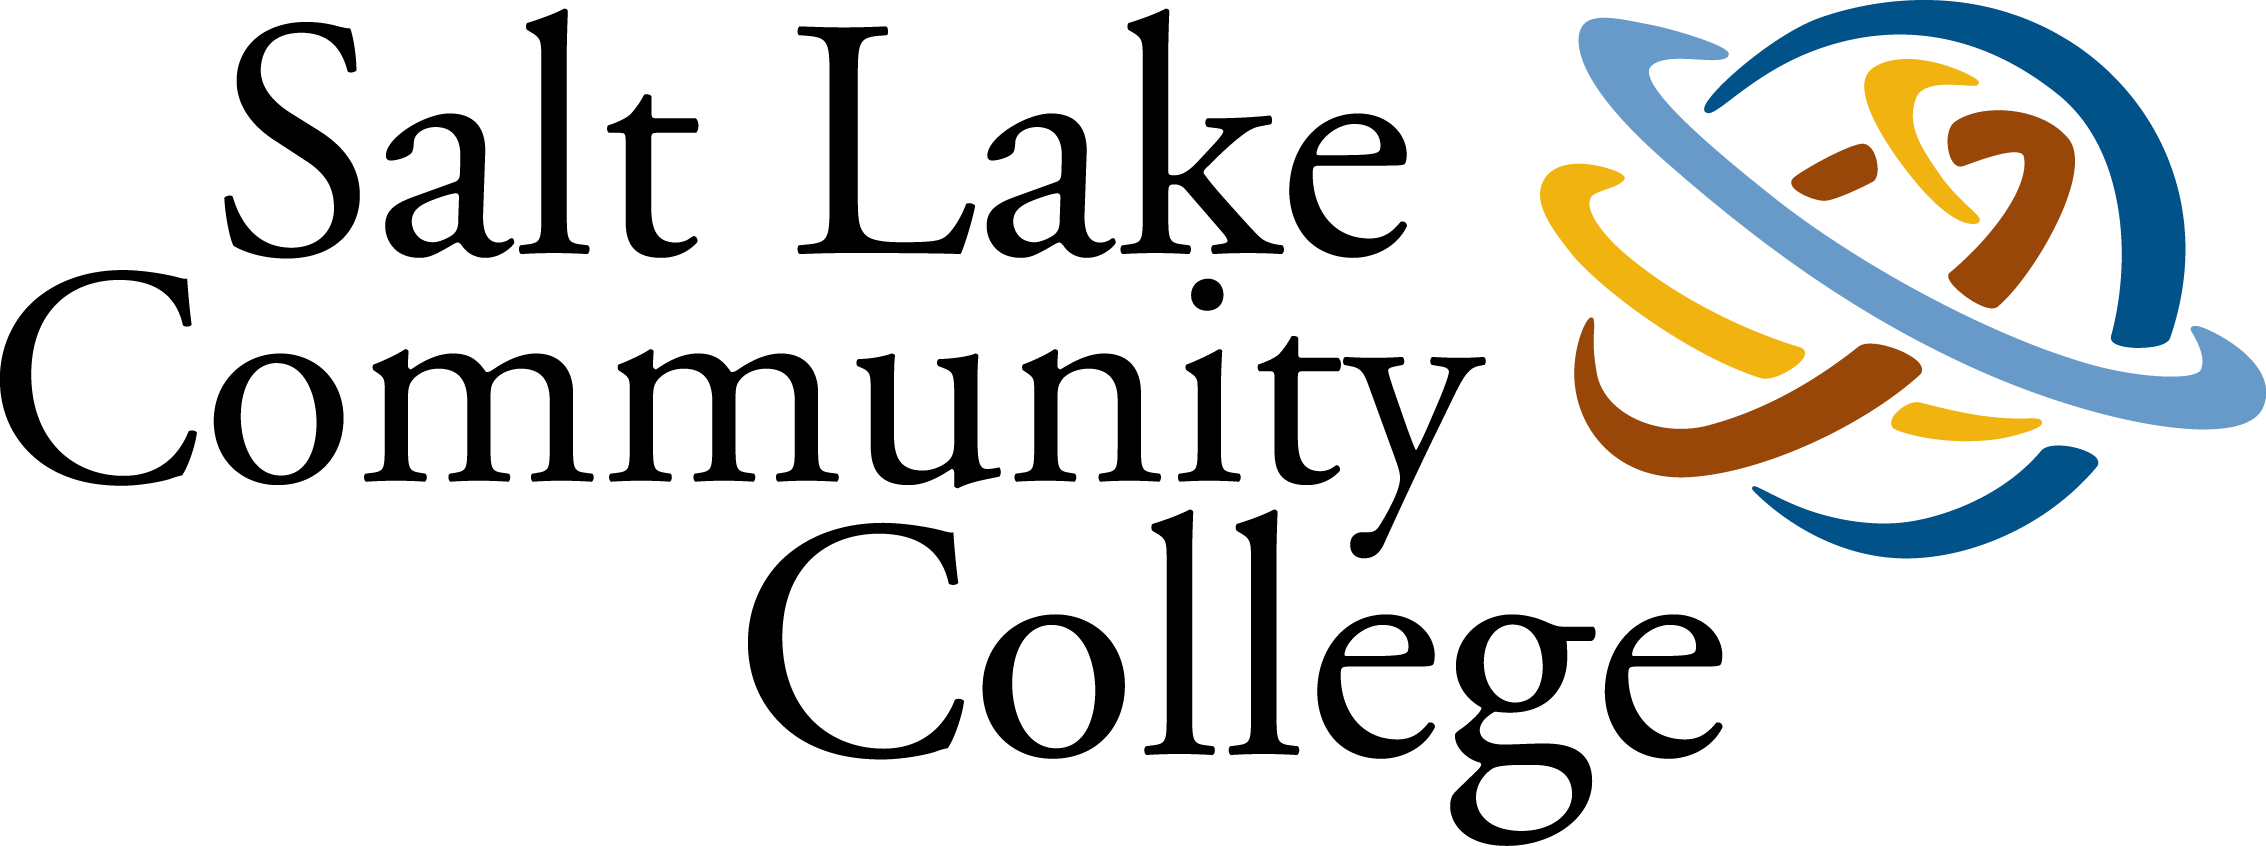 Salt Lake Community College 114